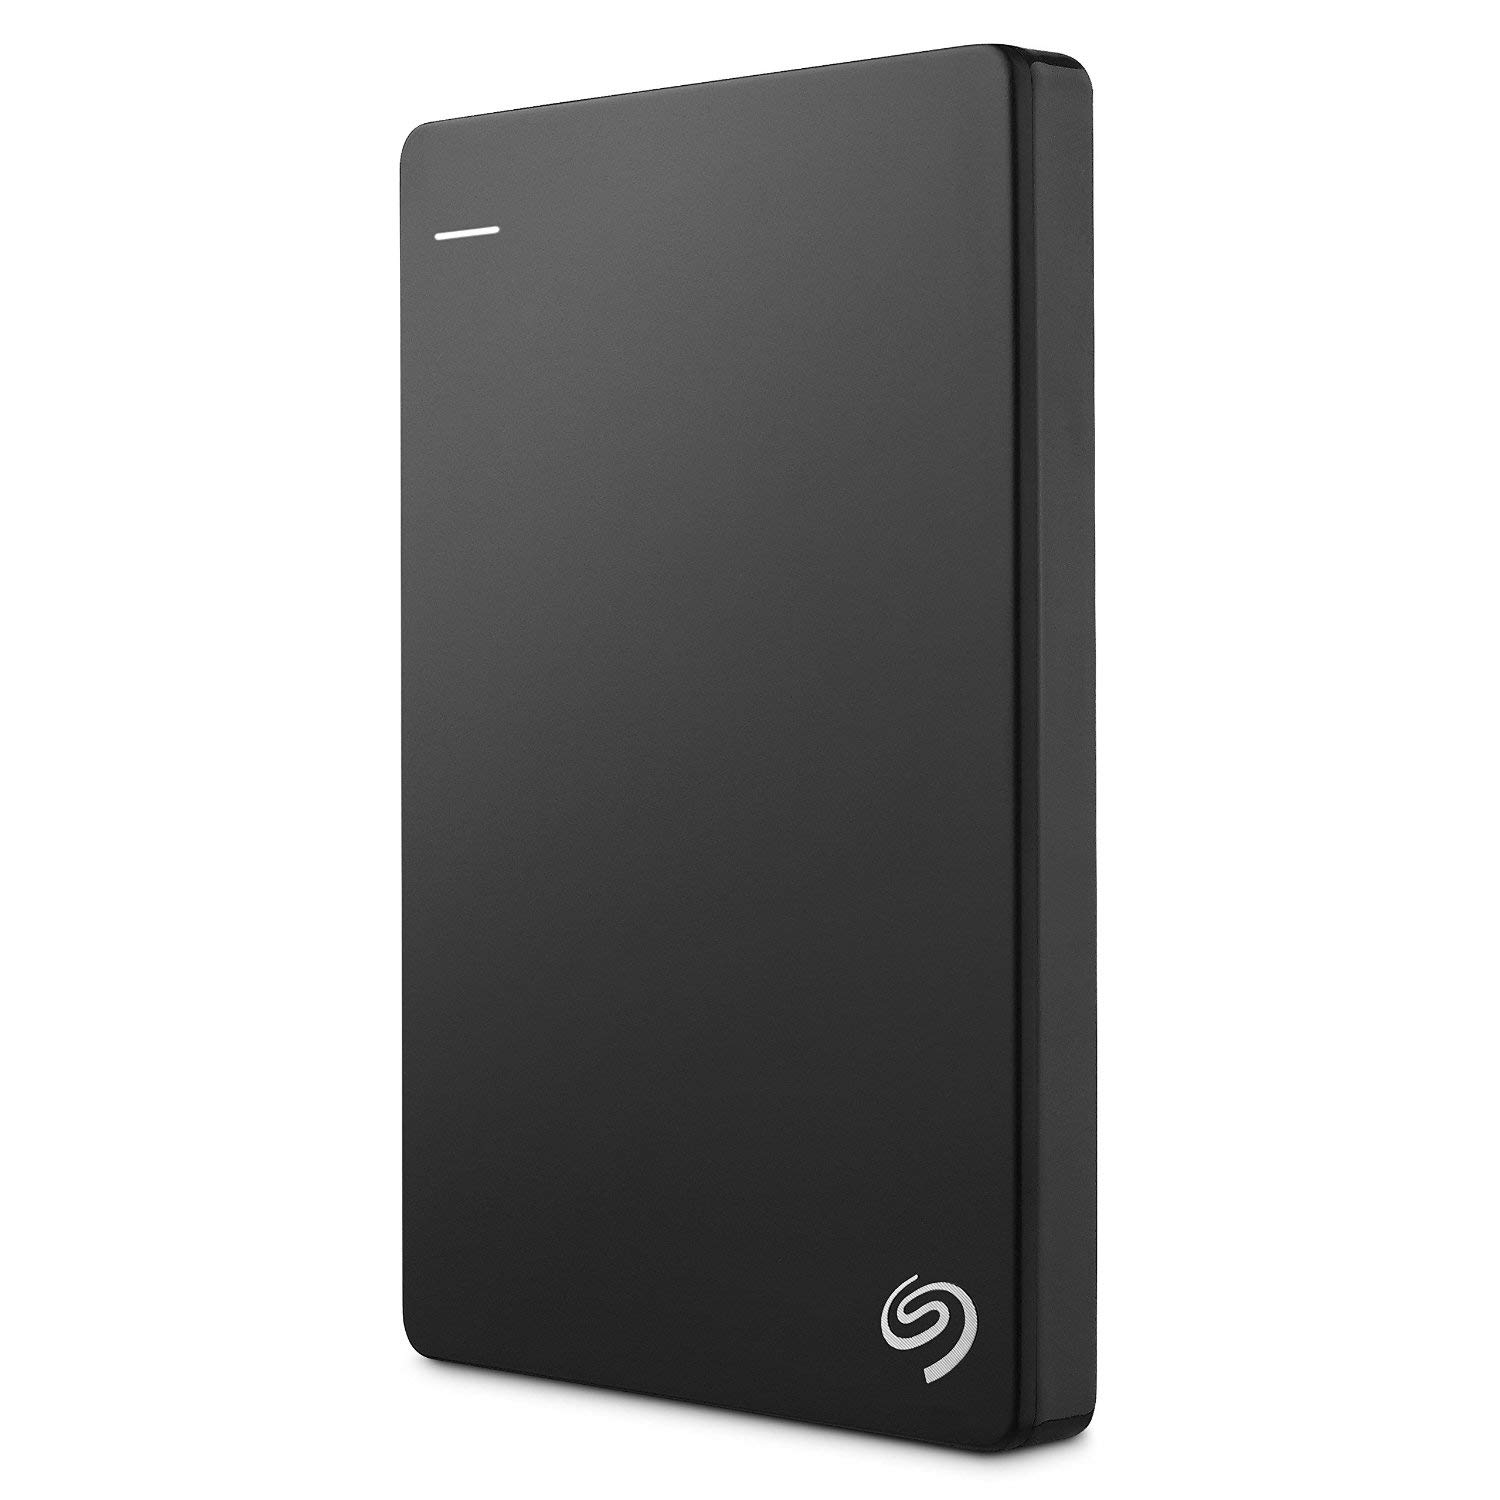 Seagate 2 TB Backup Plus USB 3.0 Slim Portable Hard Drive - Black [STDR2000200]